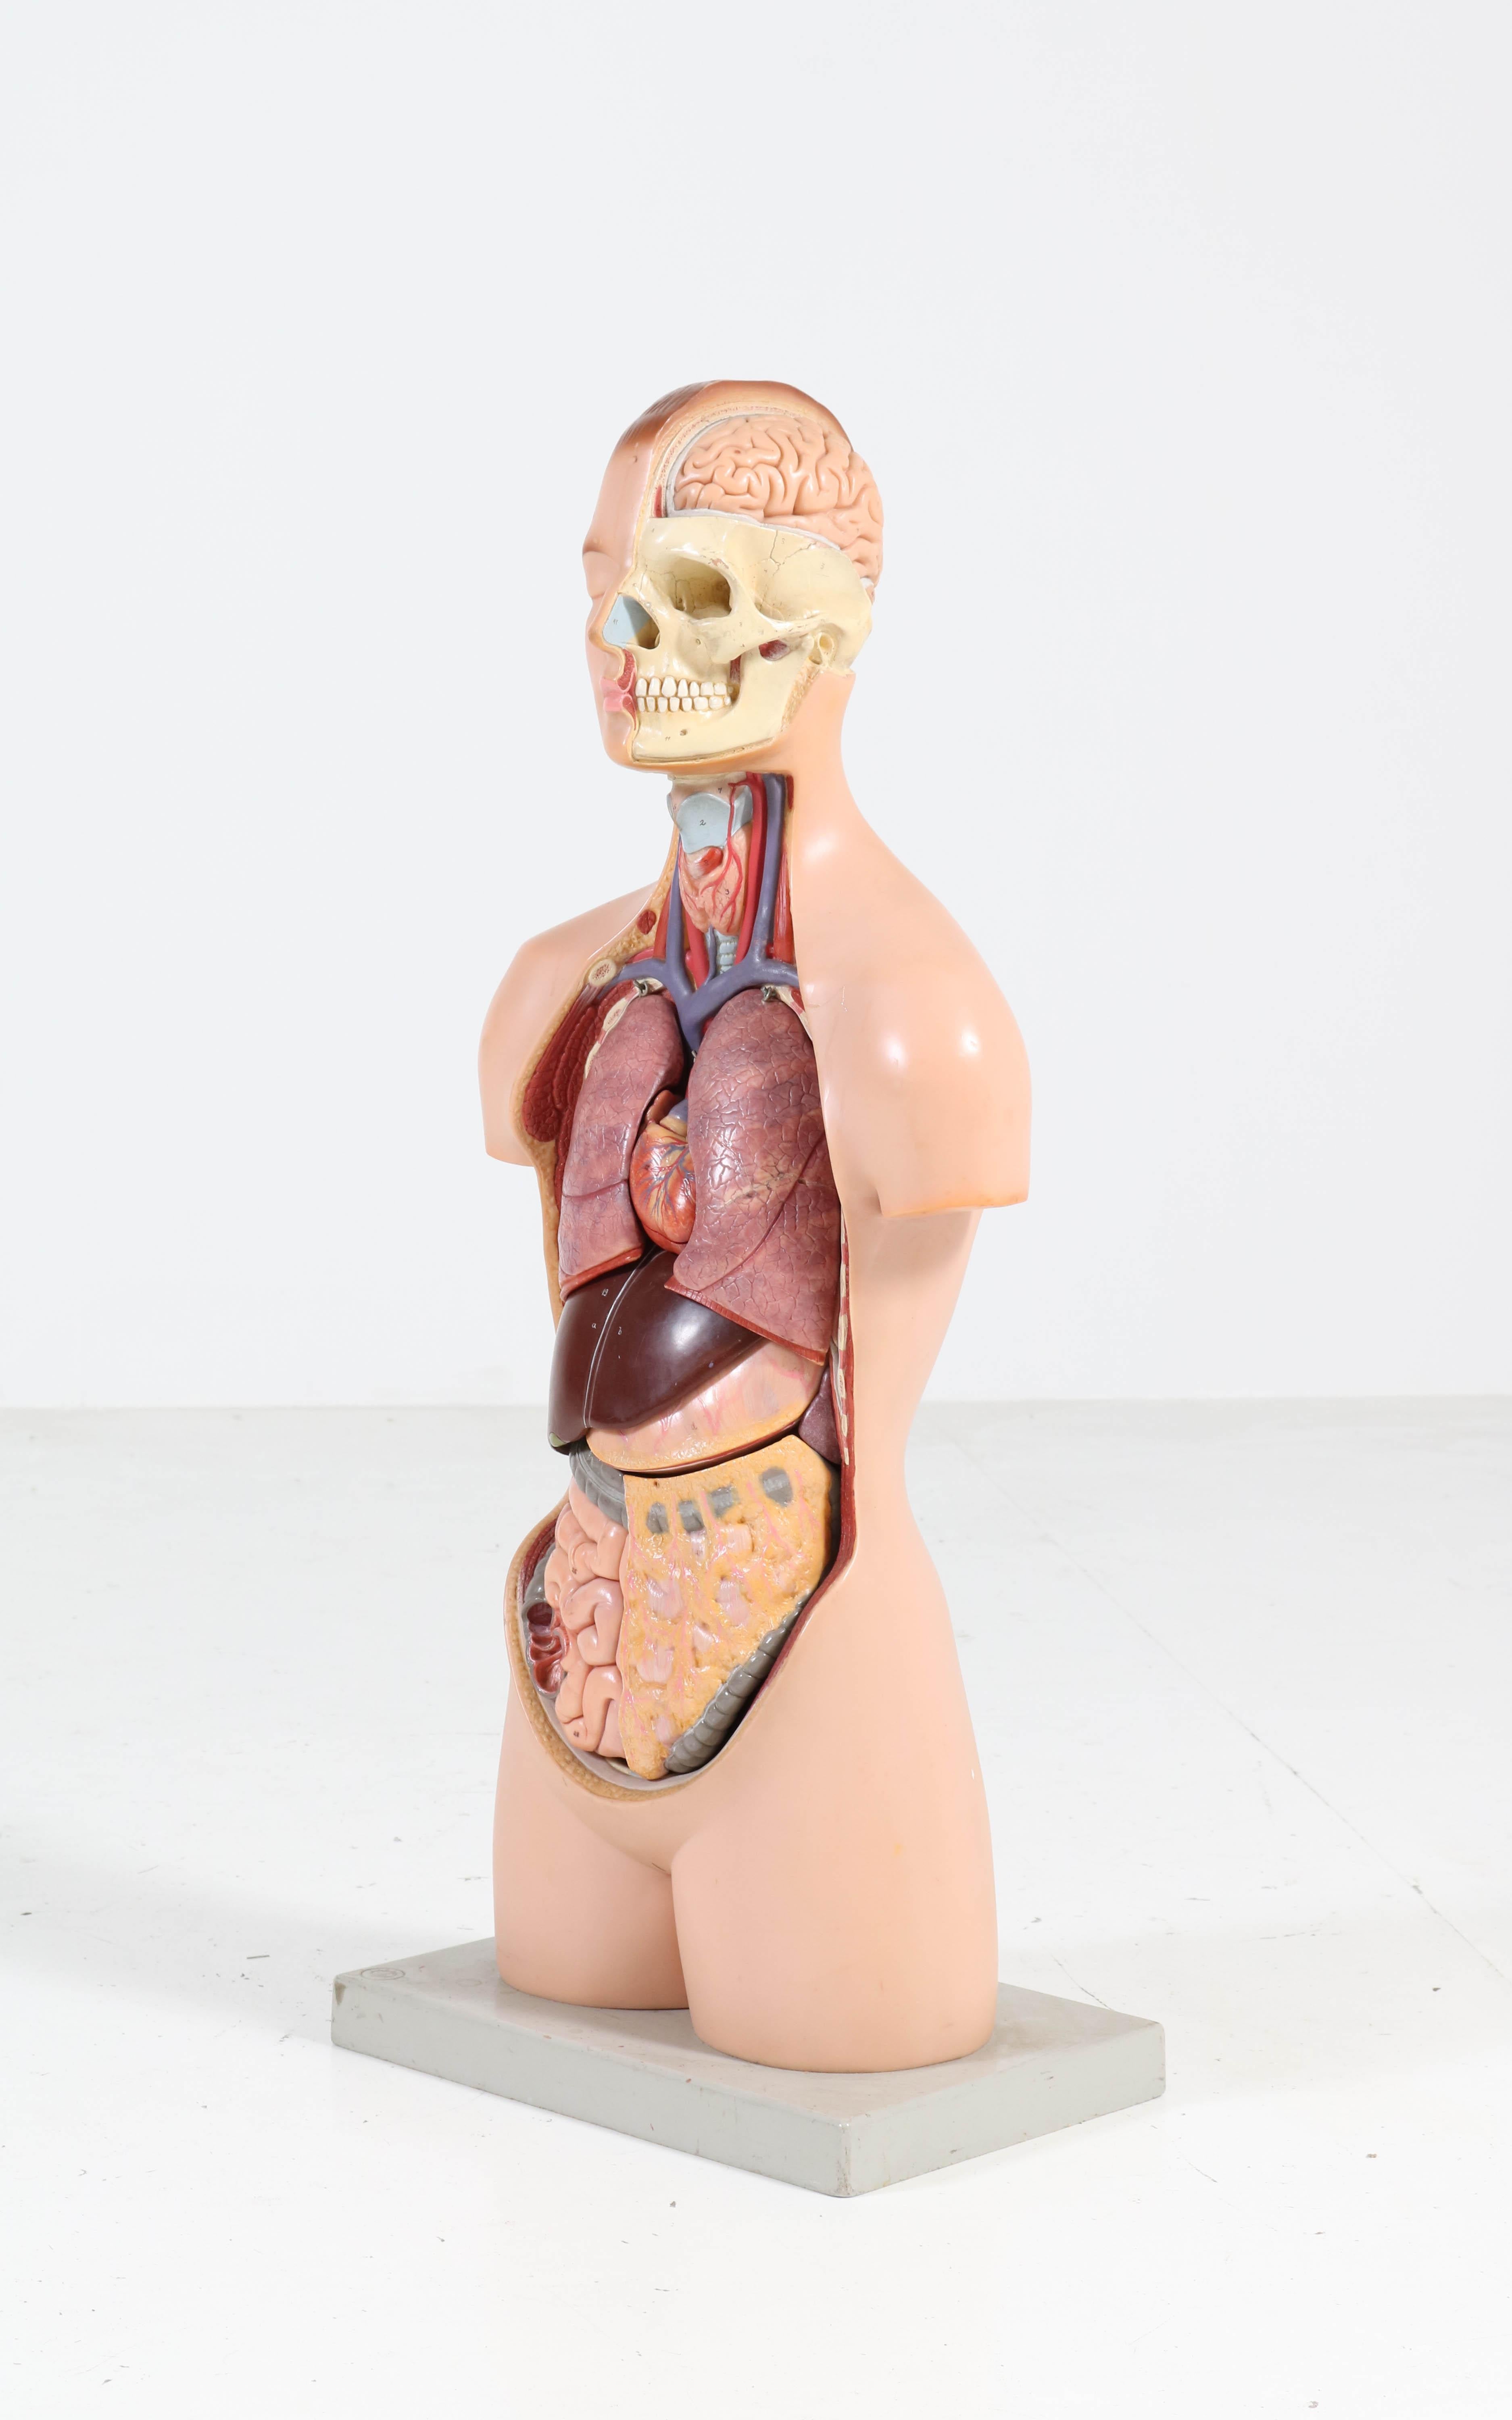 middle body anatomy